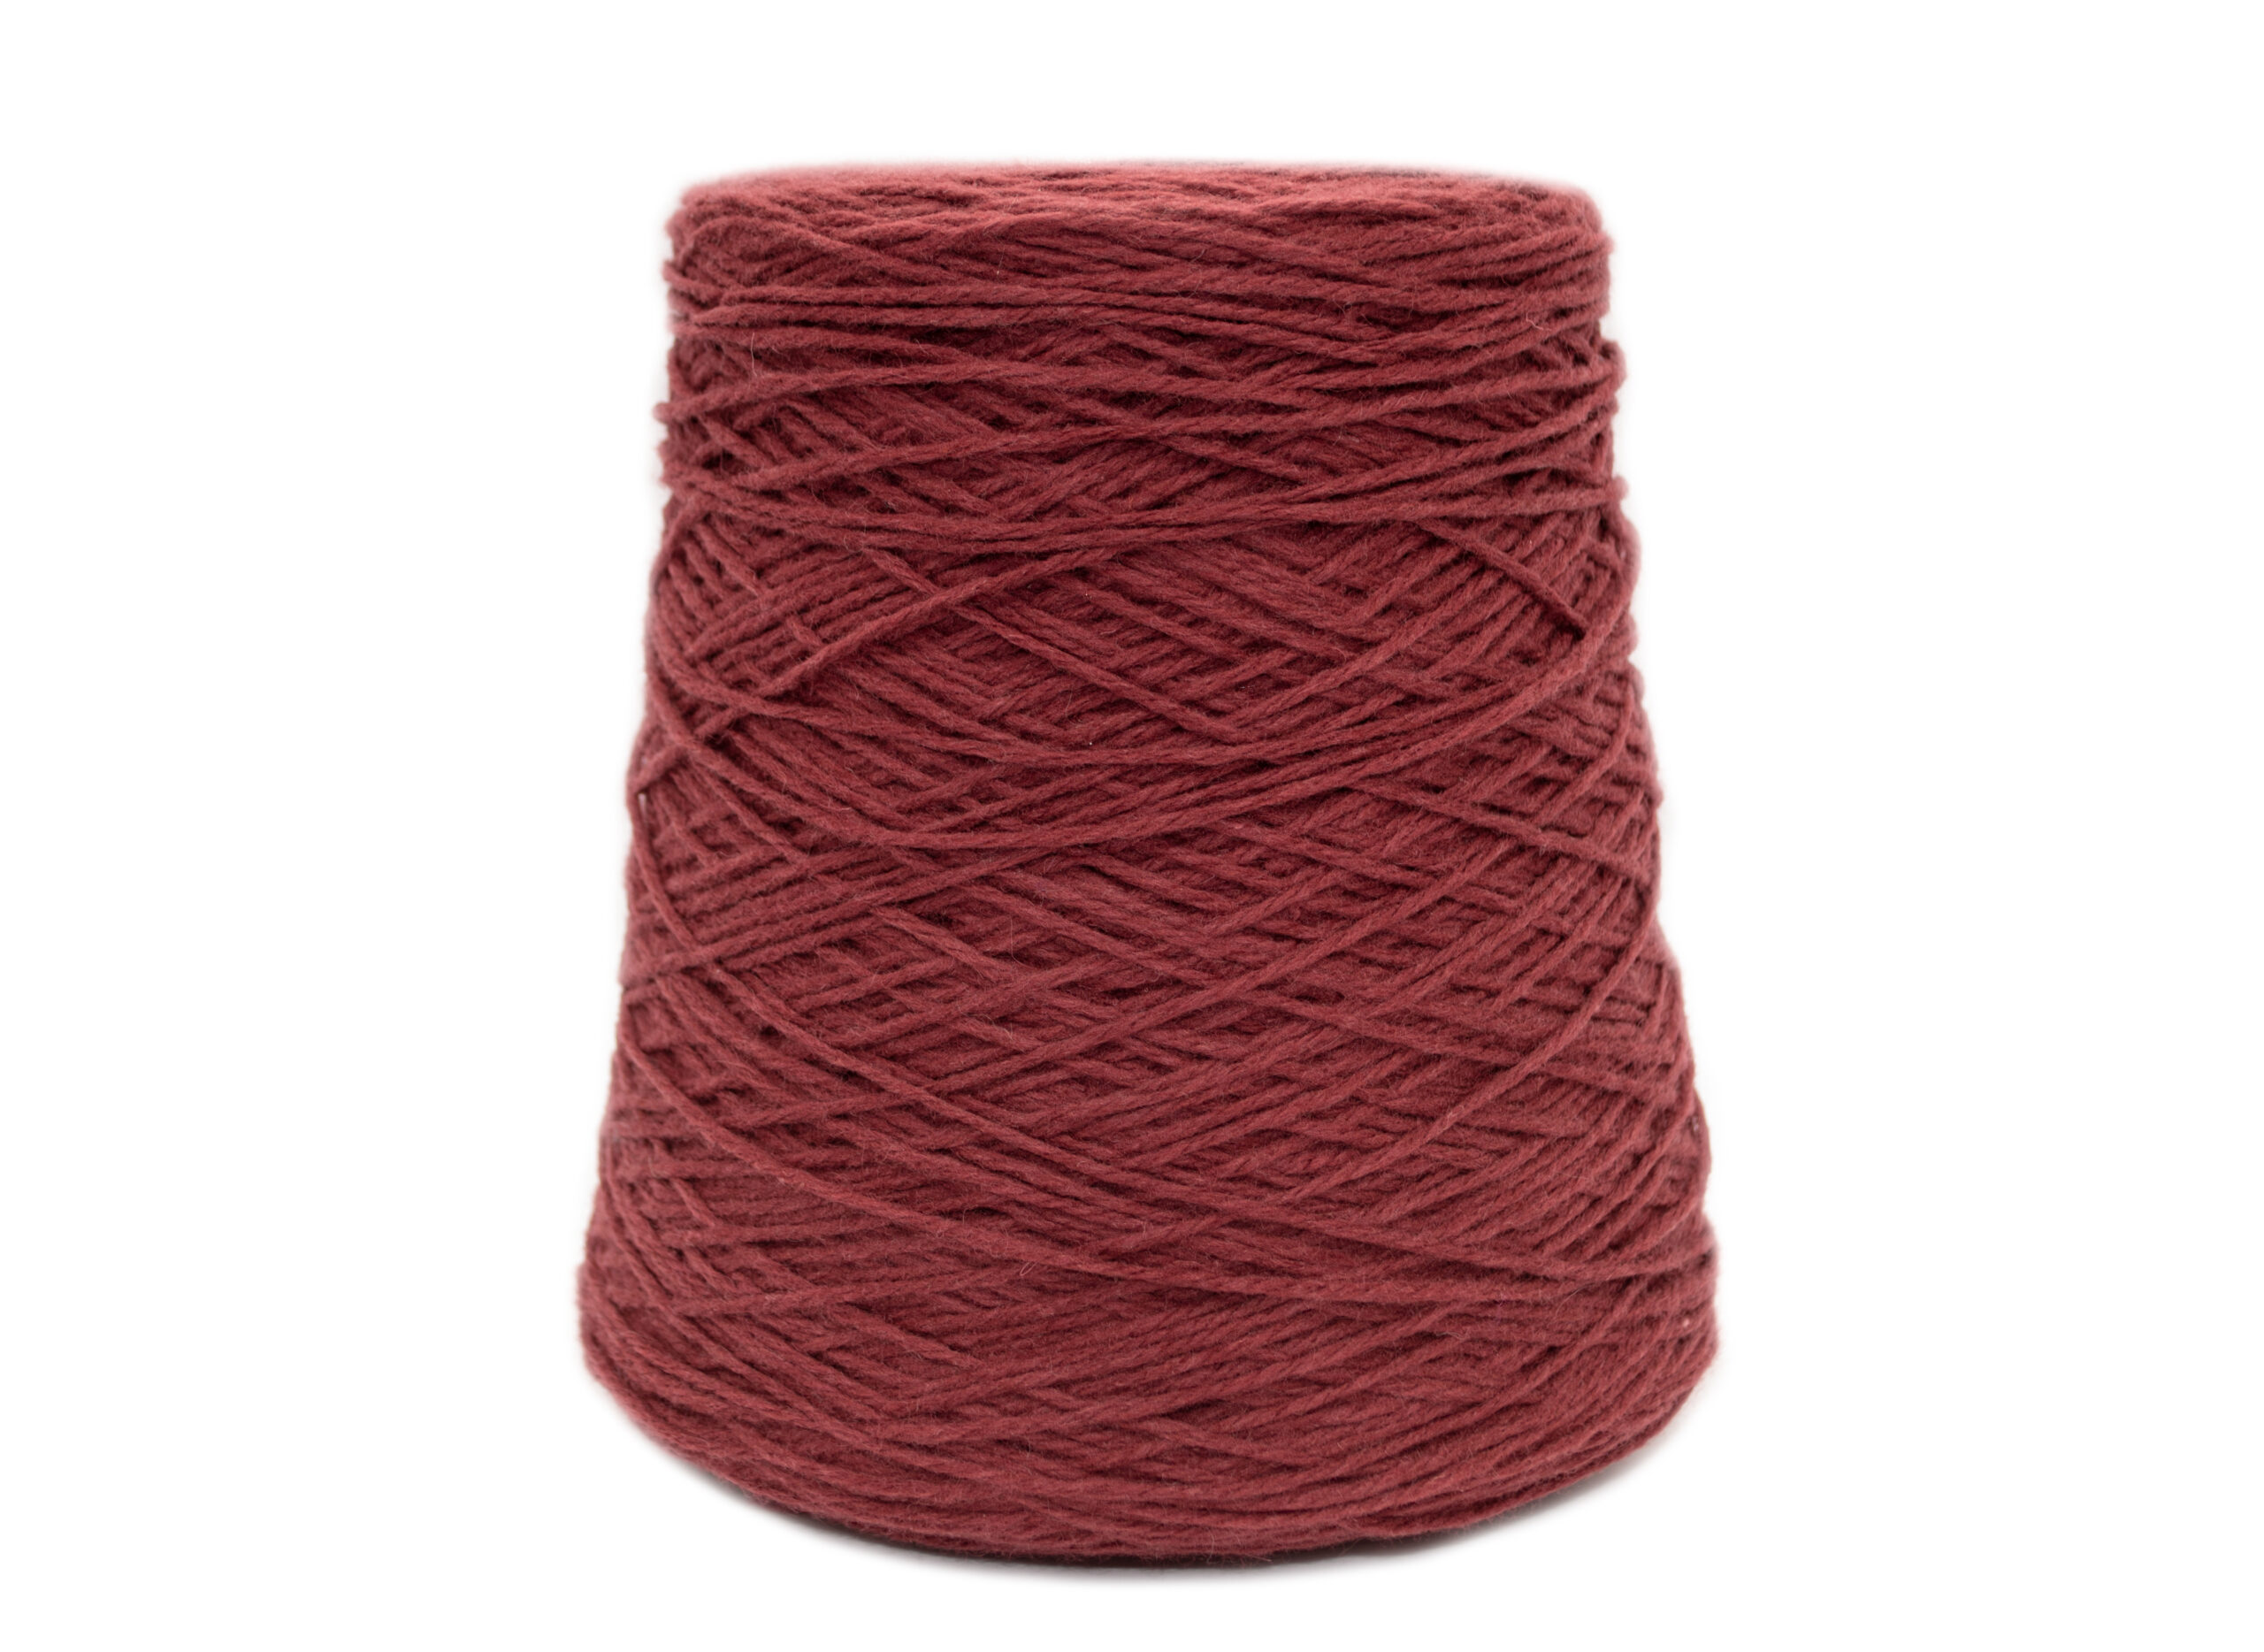 100% Merino wool - Wooly Yarn